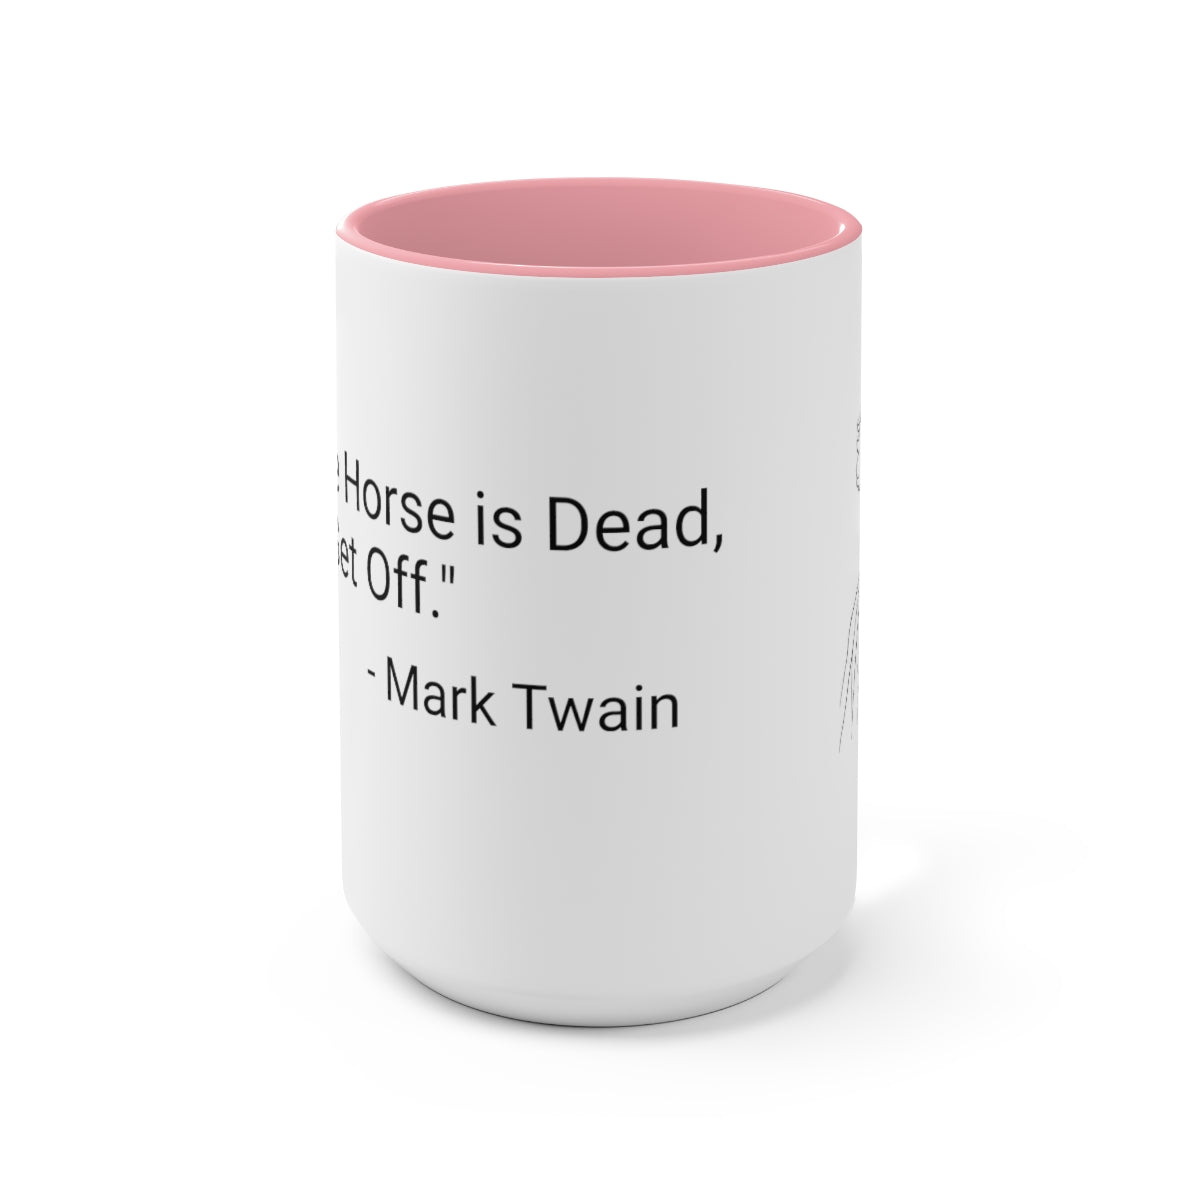 15 oz Mug - "When the Horse is Dead, Get Off."  - Mark Twain - Two-Tone Coffee Mugs